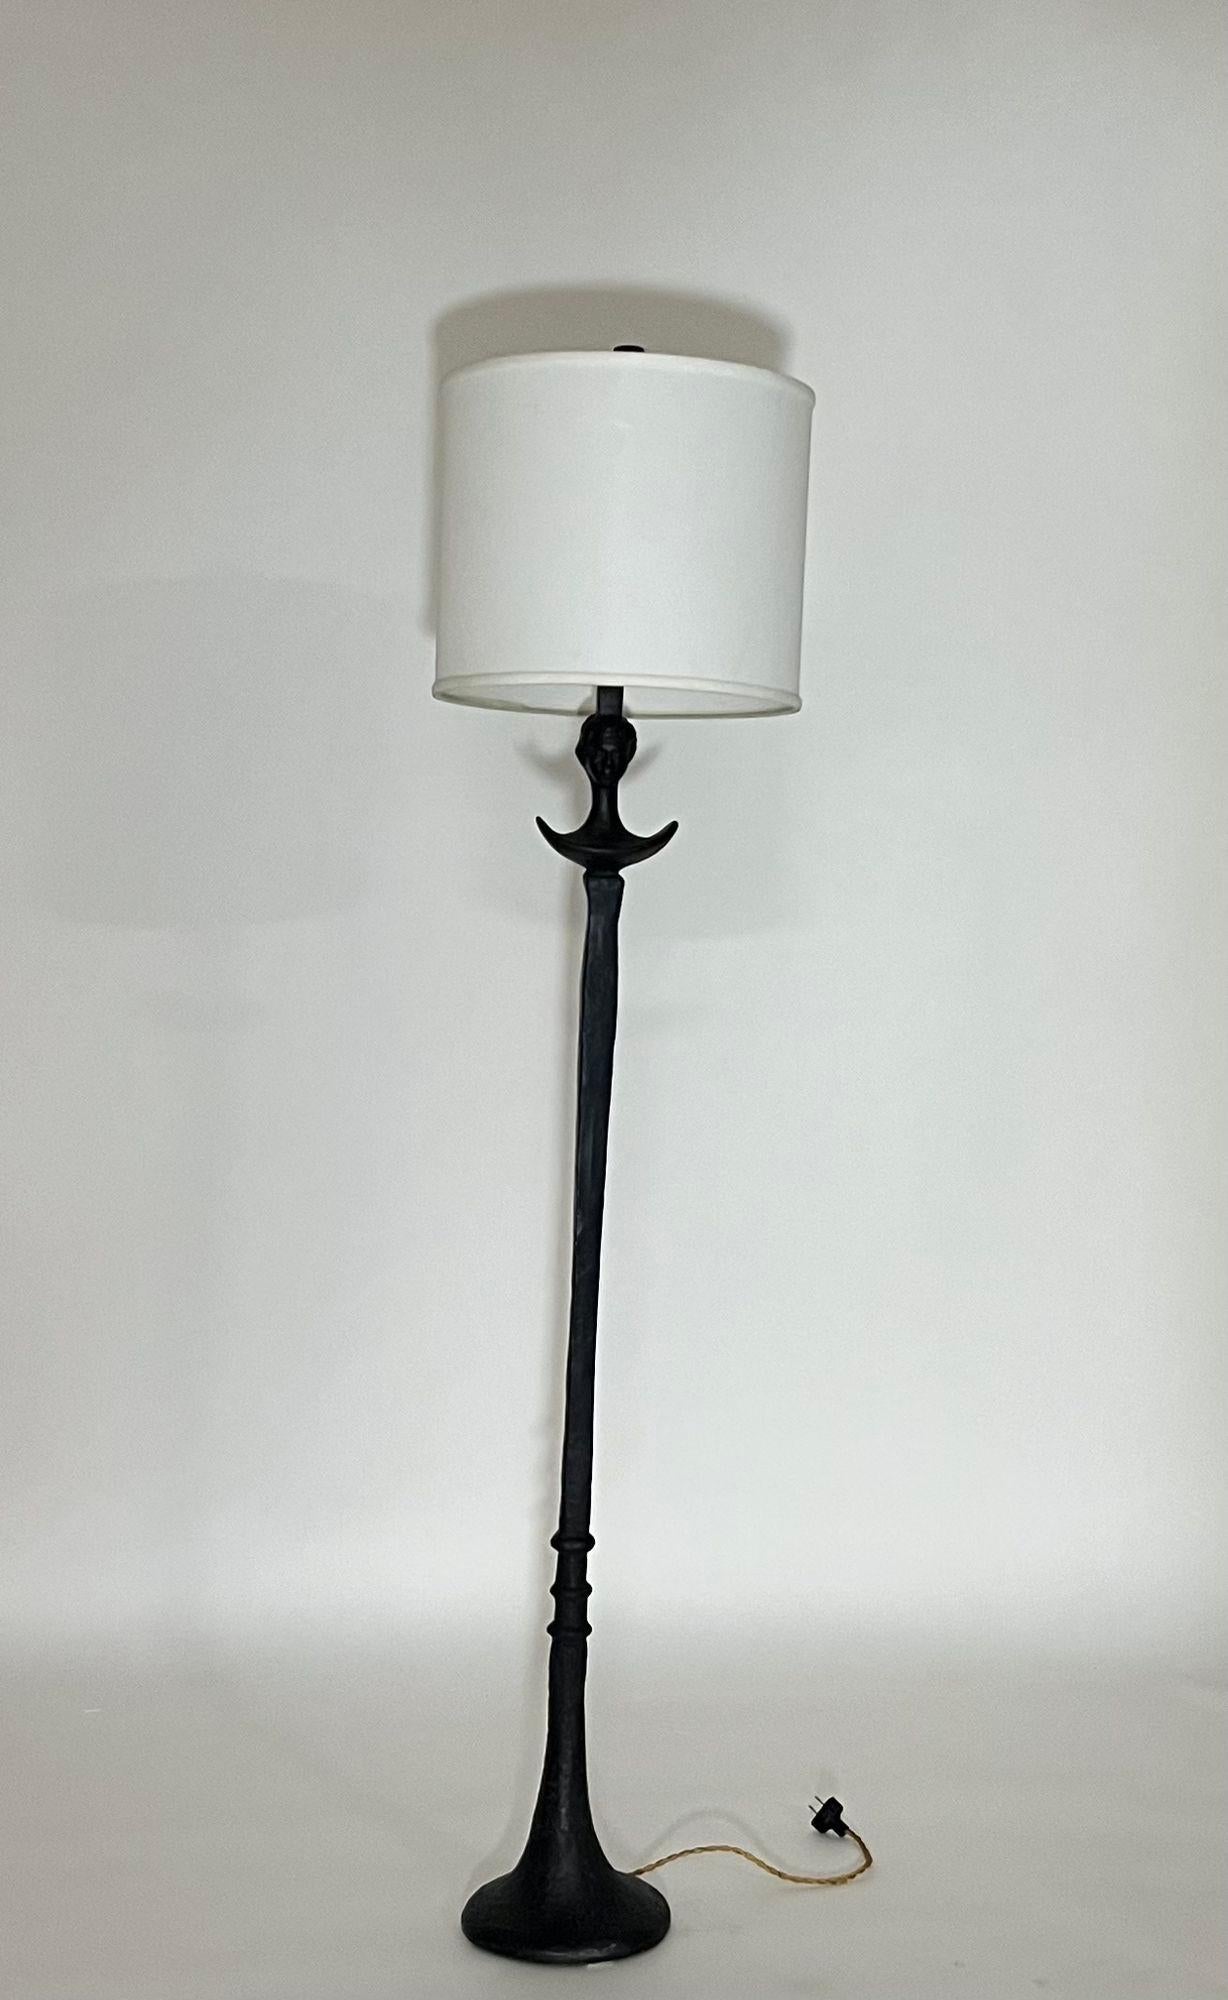 Diego Giacometti tete de femme bronze/black floor lamp.